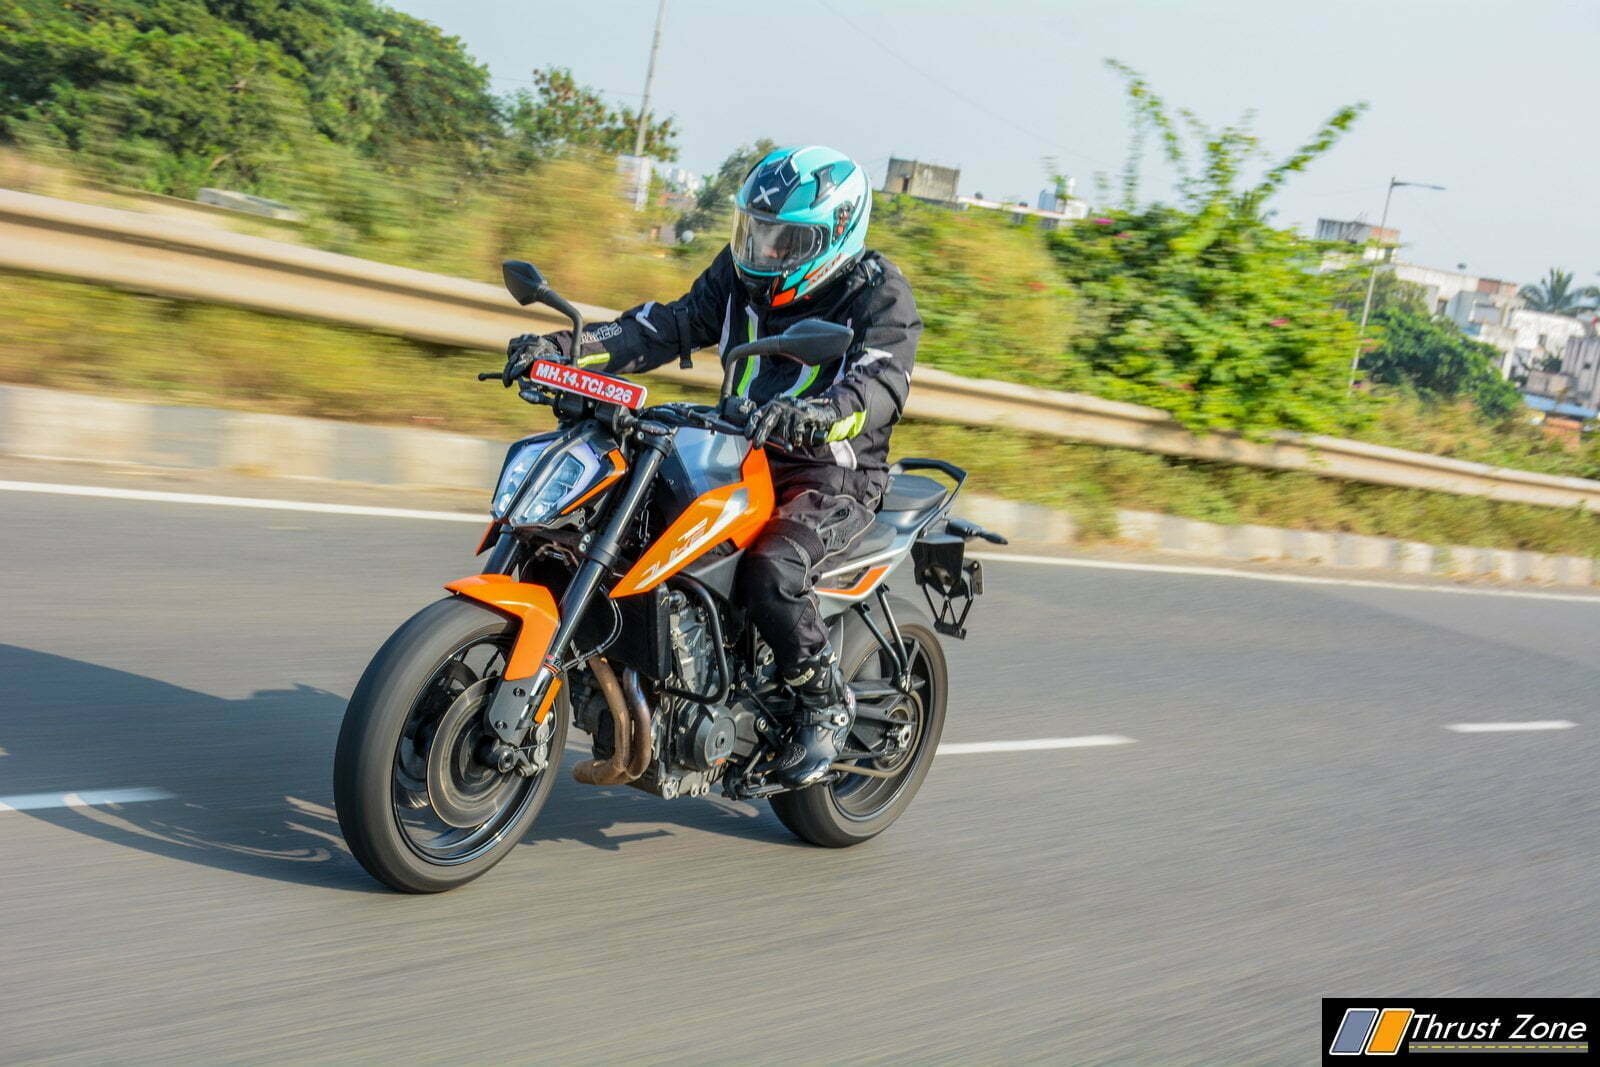 2019-KTM-Duke-790-India-Review-4